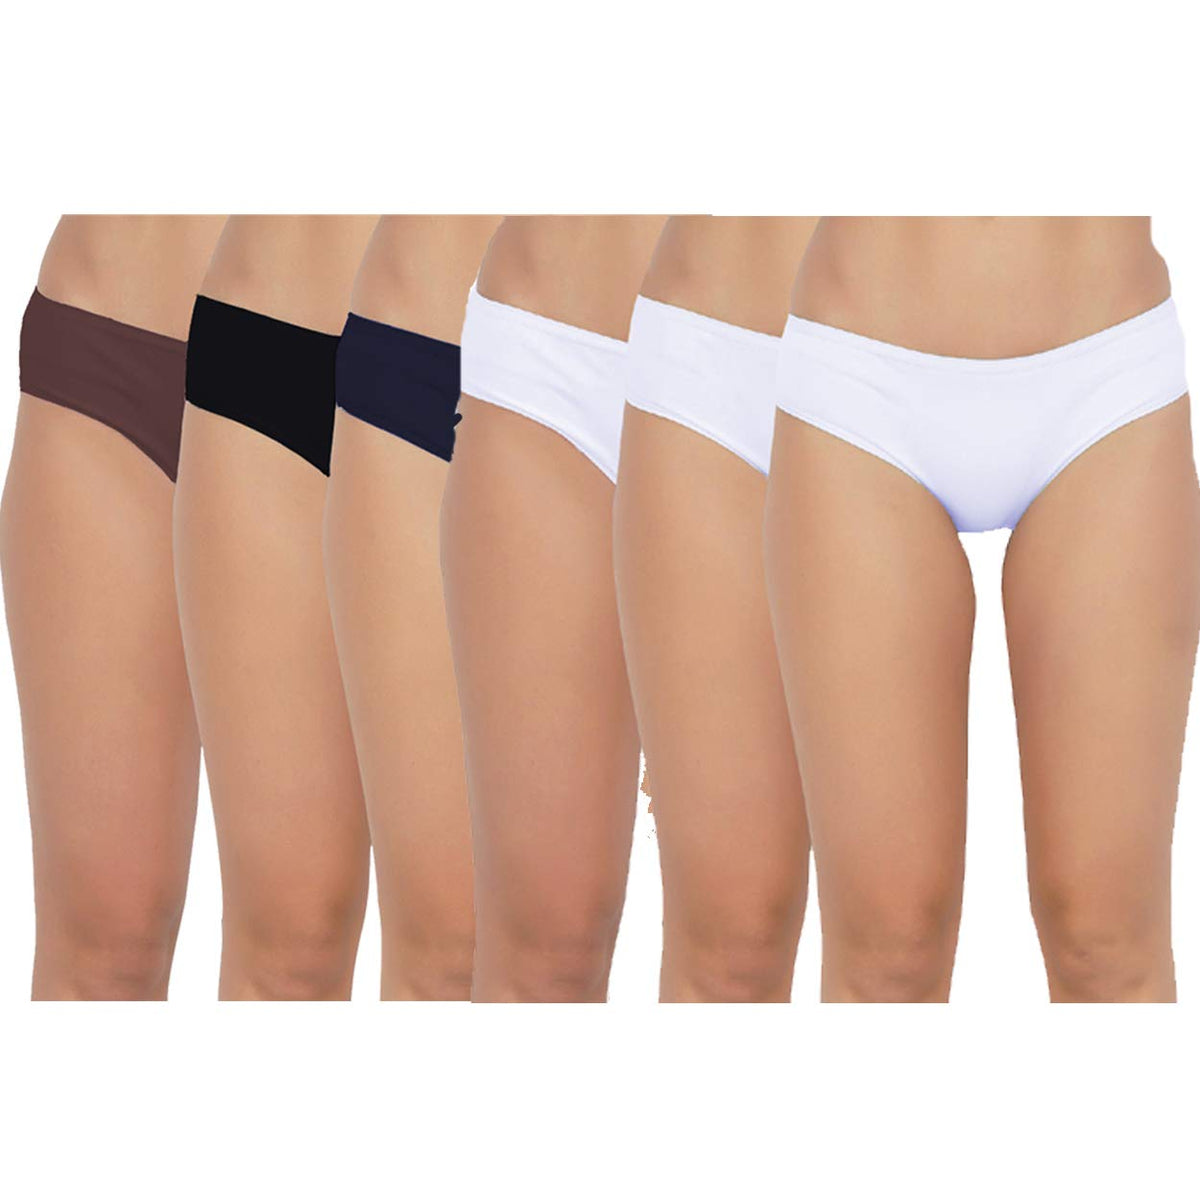 BLAZON Premium Women's Super Soft Cotton Hoisery Plain Mid Rise Hipster (Outer-Elastic) Panty |Combo Pack| Available Sizes: (S, M, L, XL, 2XL, 3XL, 4XL, 5XL) - White, Black, Brown, Navy Blue